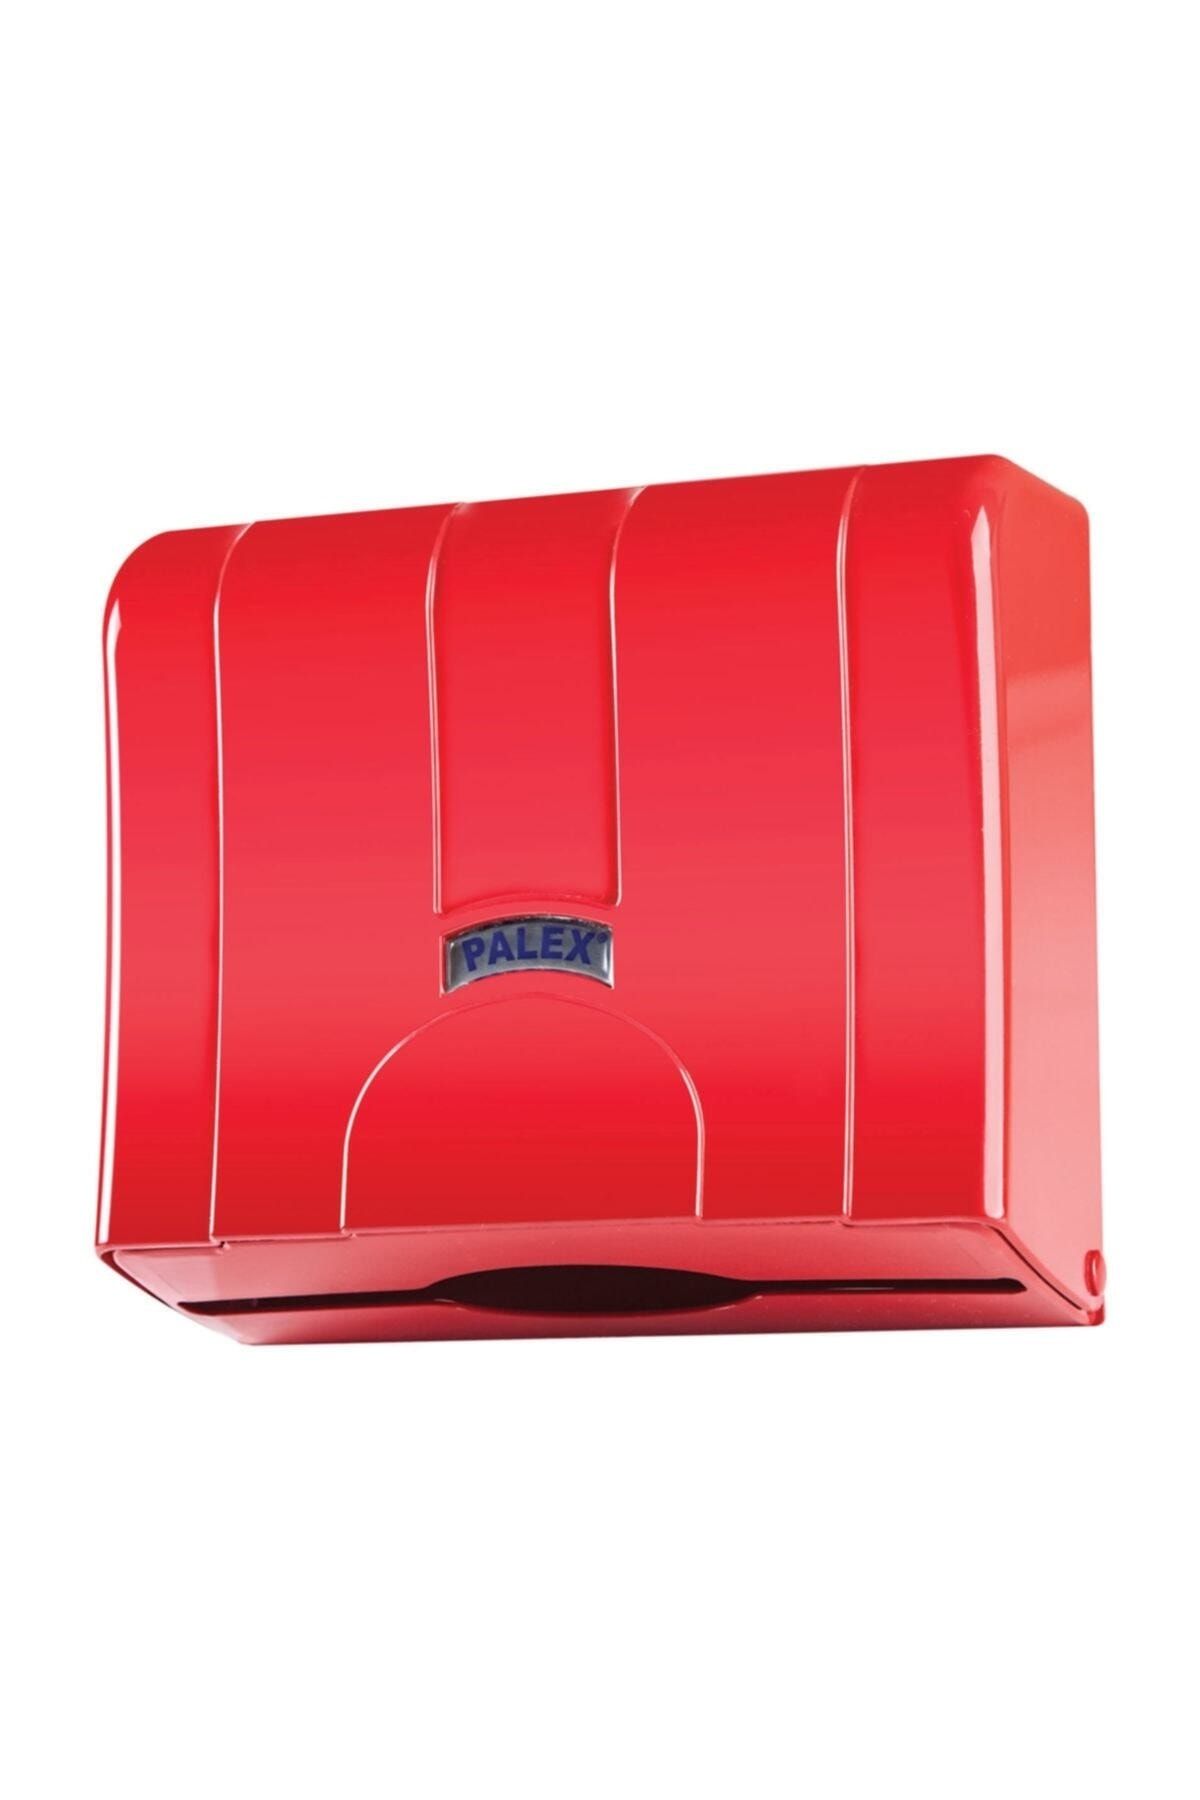 Palex 3570-b Standart Z Katlı Kağıt Havlu Dispenseri Kırmızı